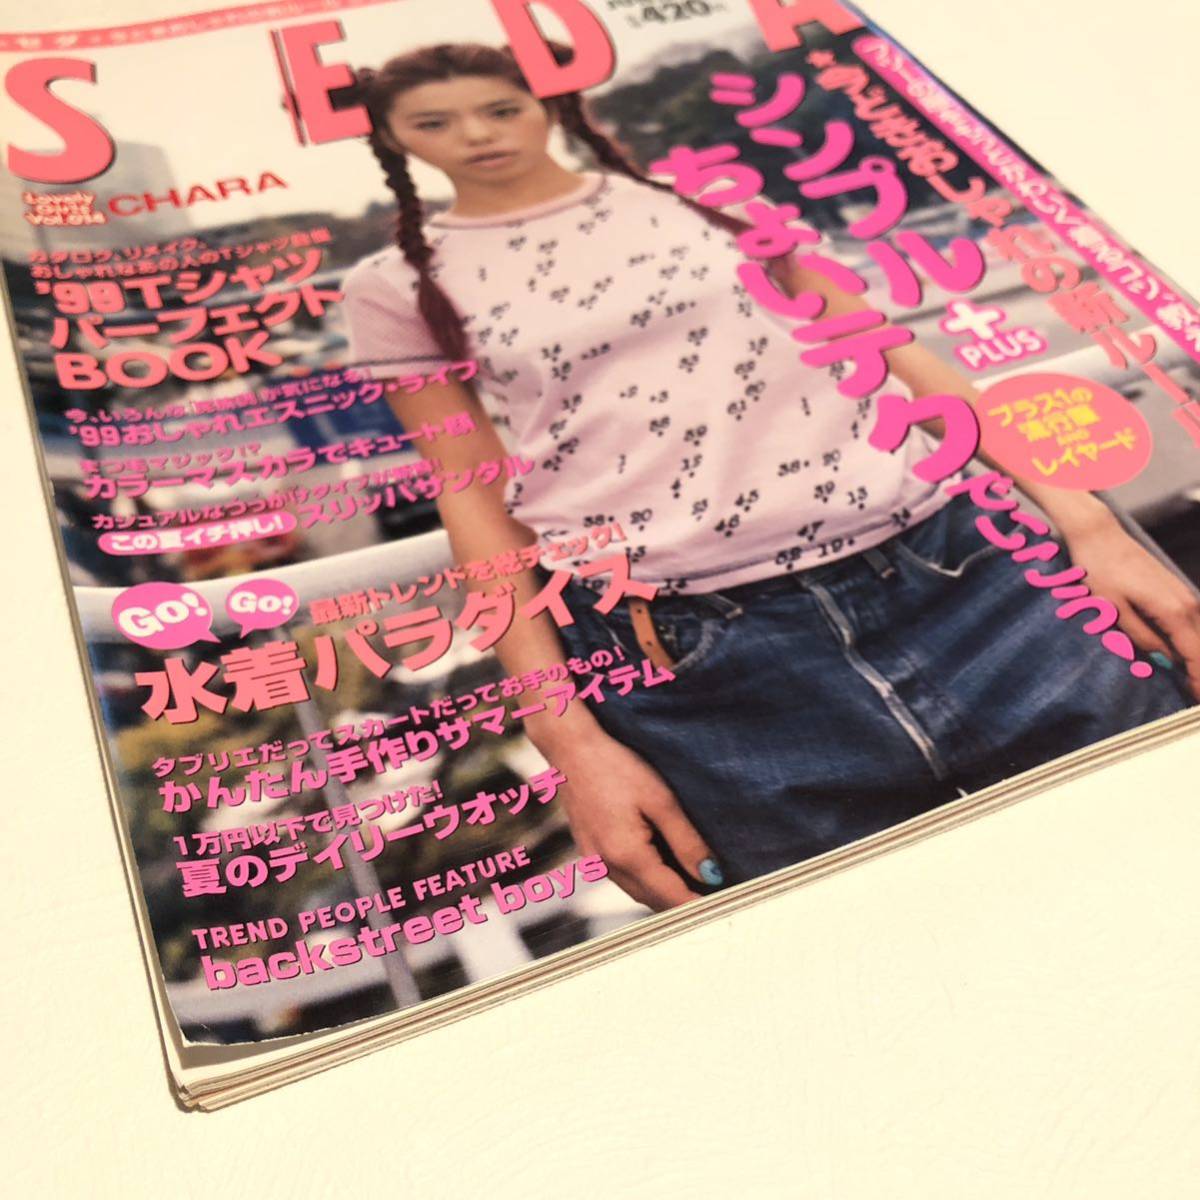 SEDA 雑誌/1999年6月号 chara チャラ/妻夫木聡/aiko/おしゃれなあの人のTシャツ自慢/セダ_画像2